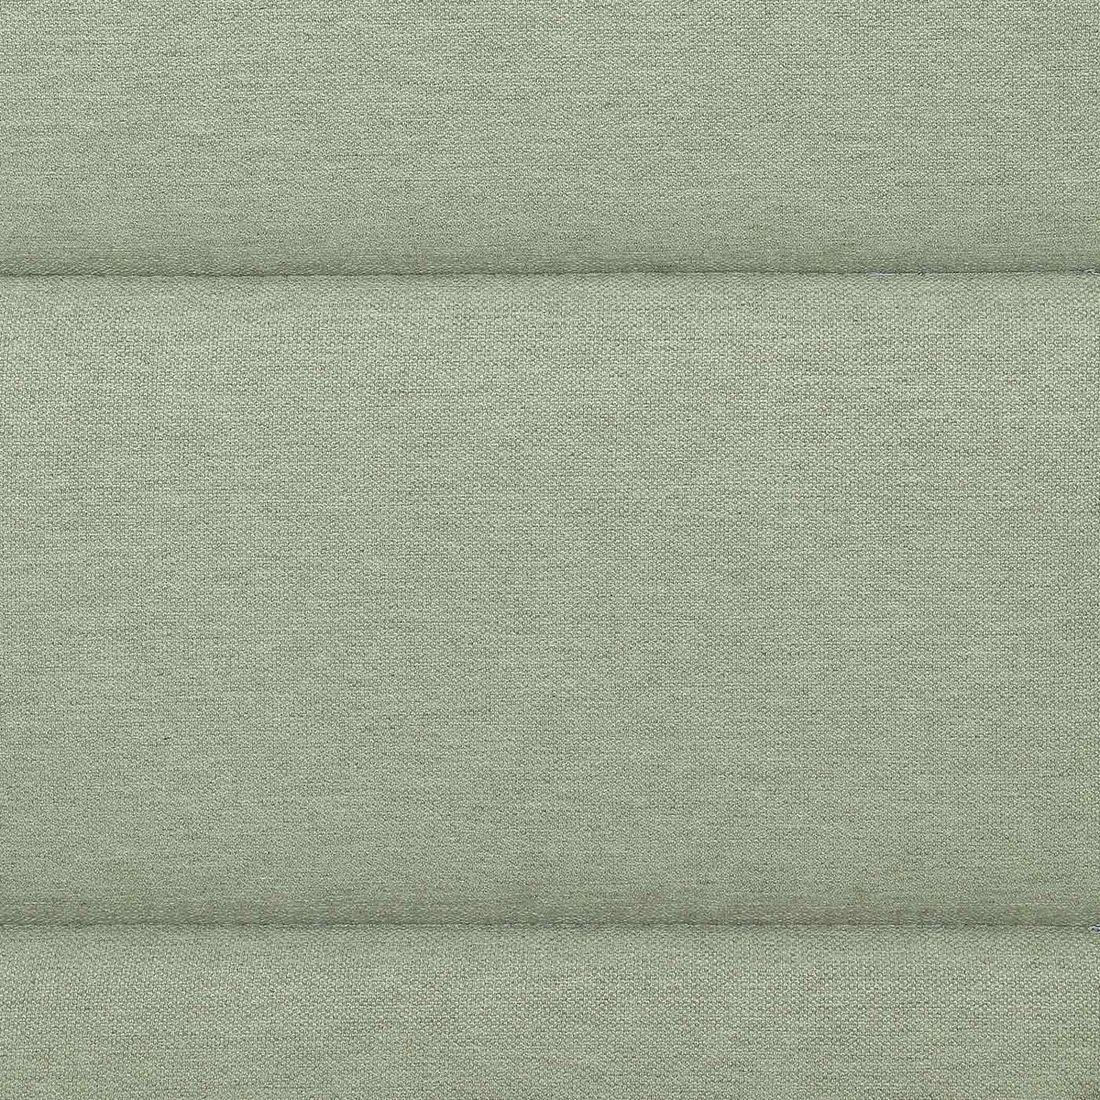 GO-DE Sesselauflage hoch 120x48cm Polyester